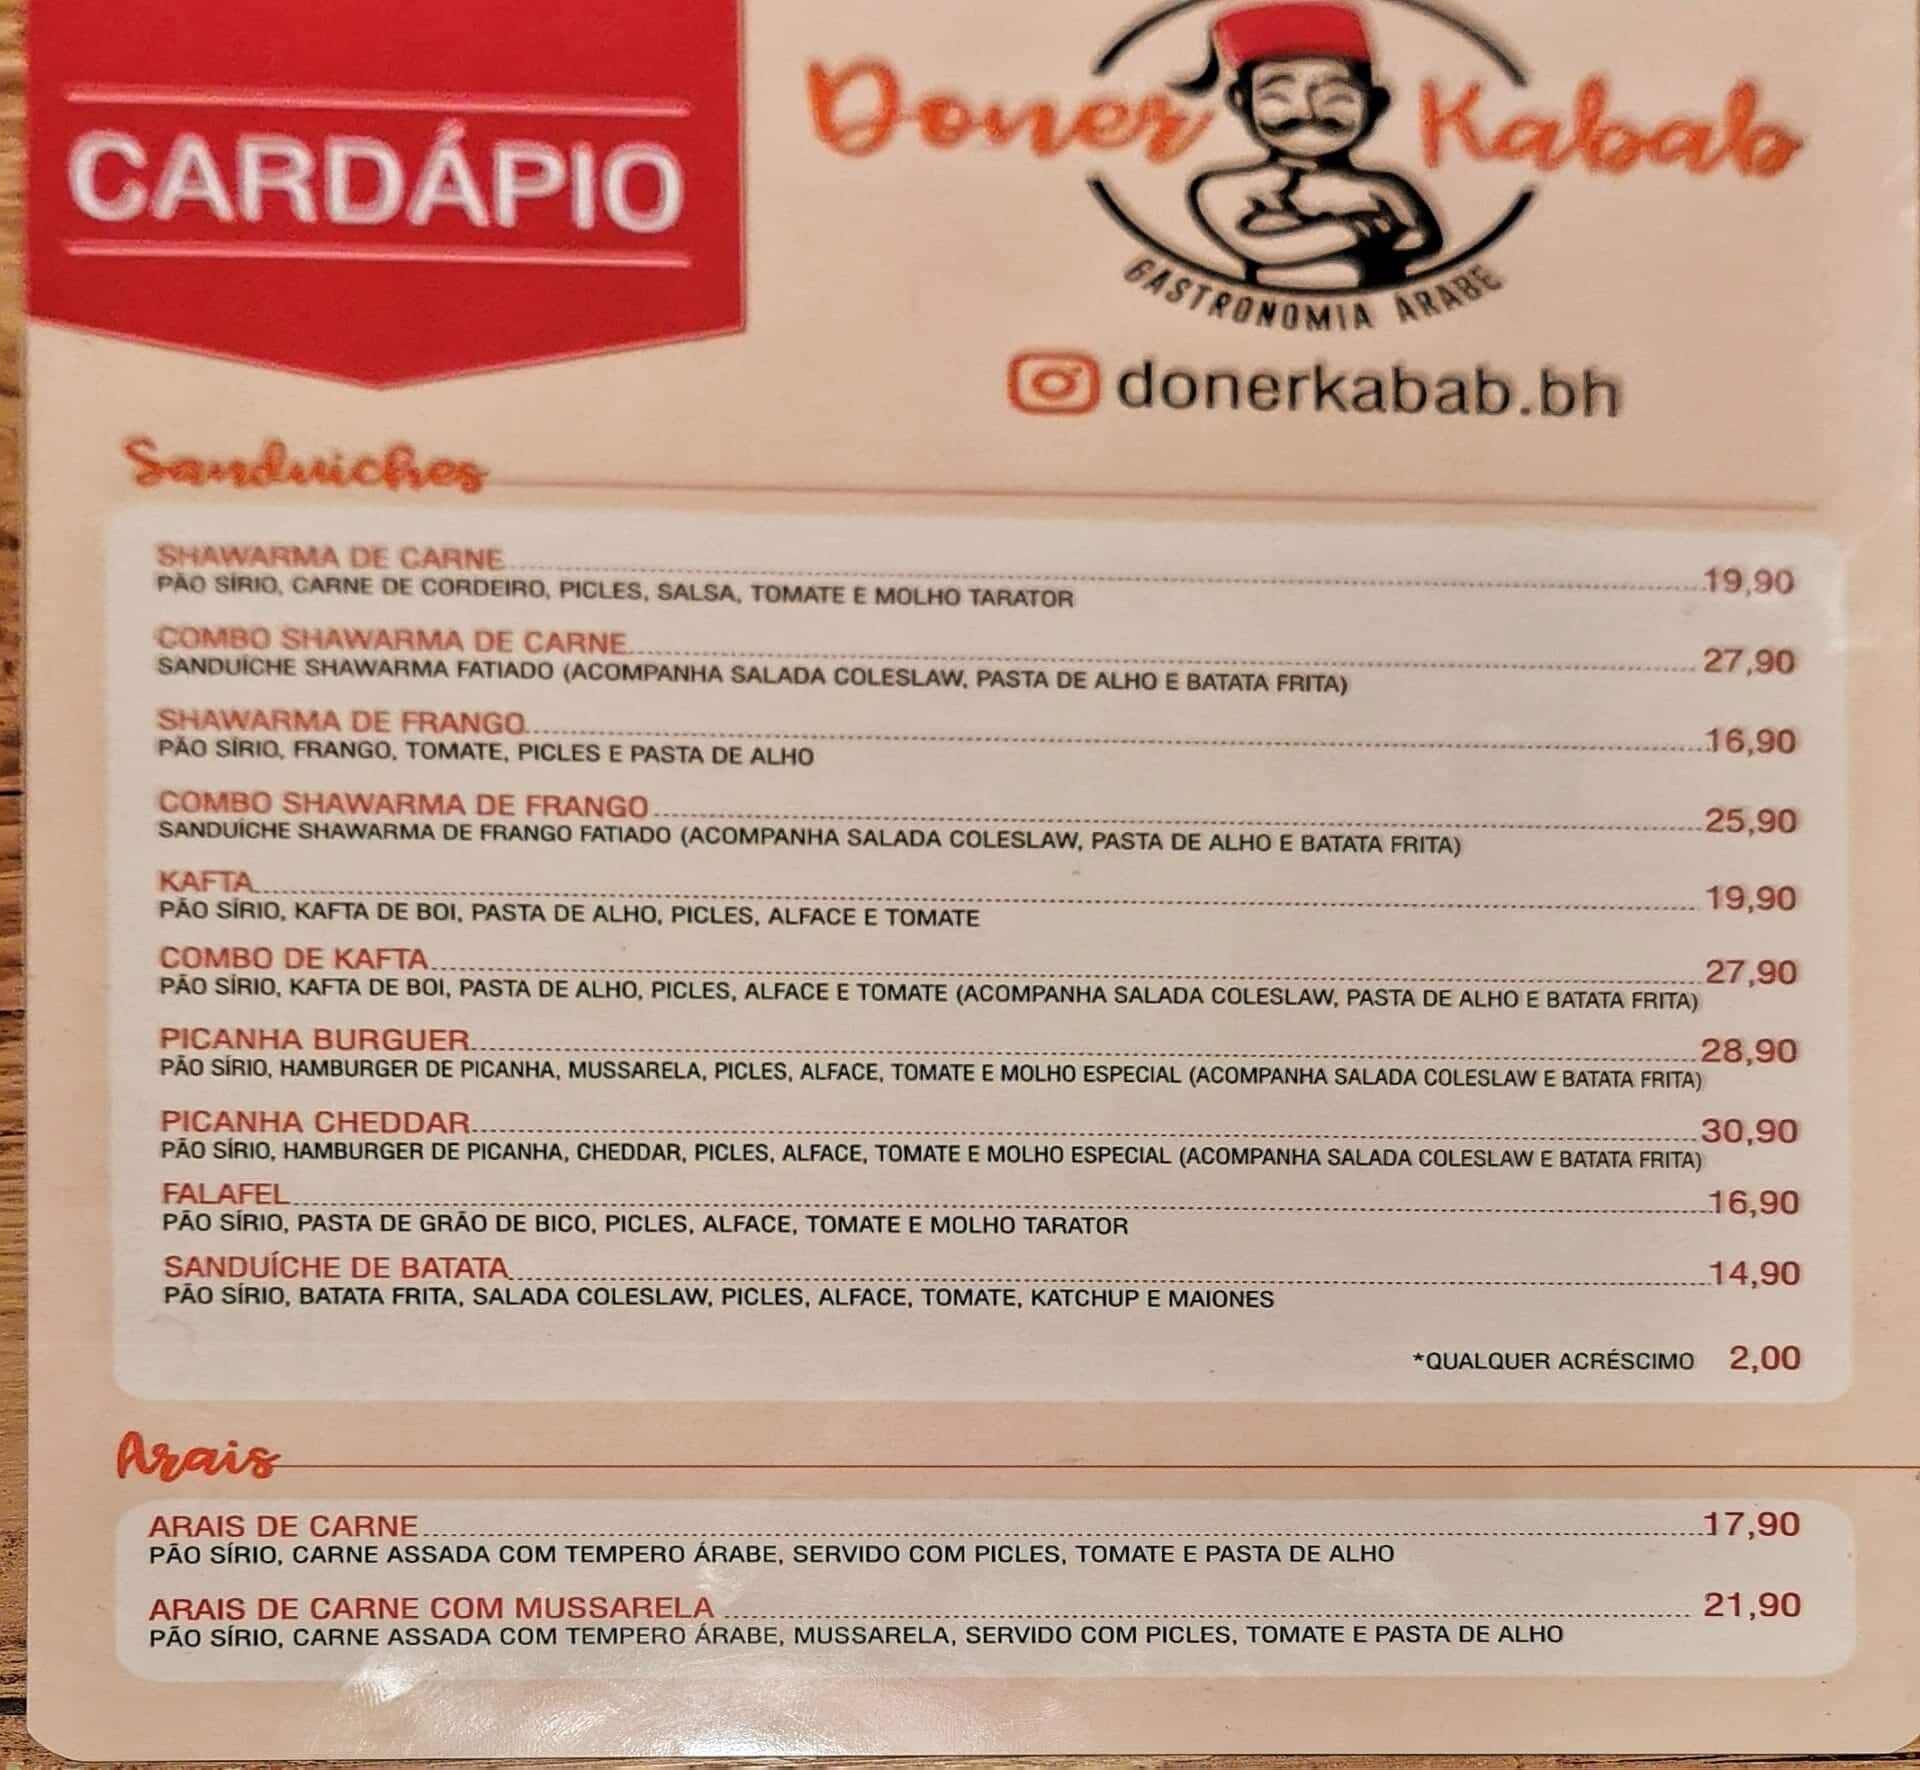 Doner Kabab: Gastronomia Árabe